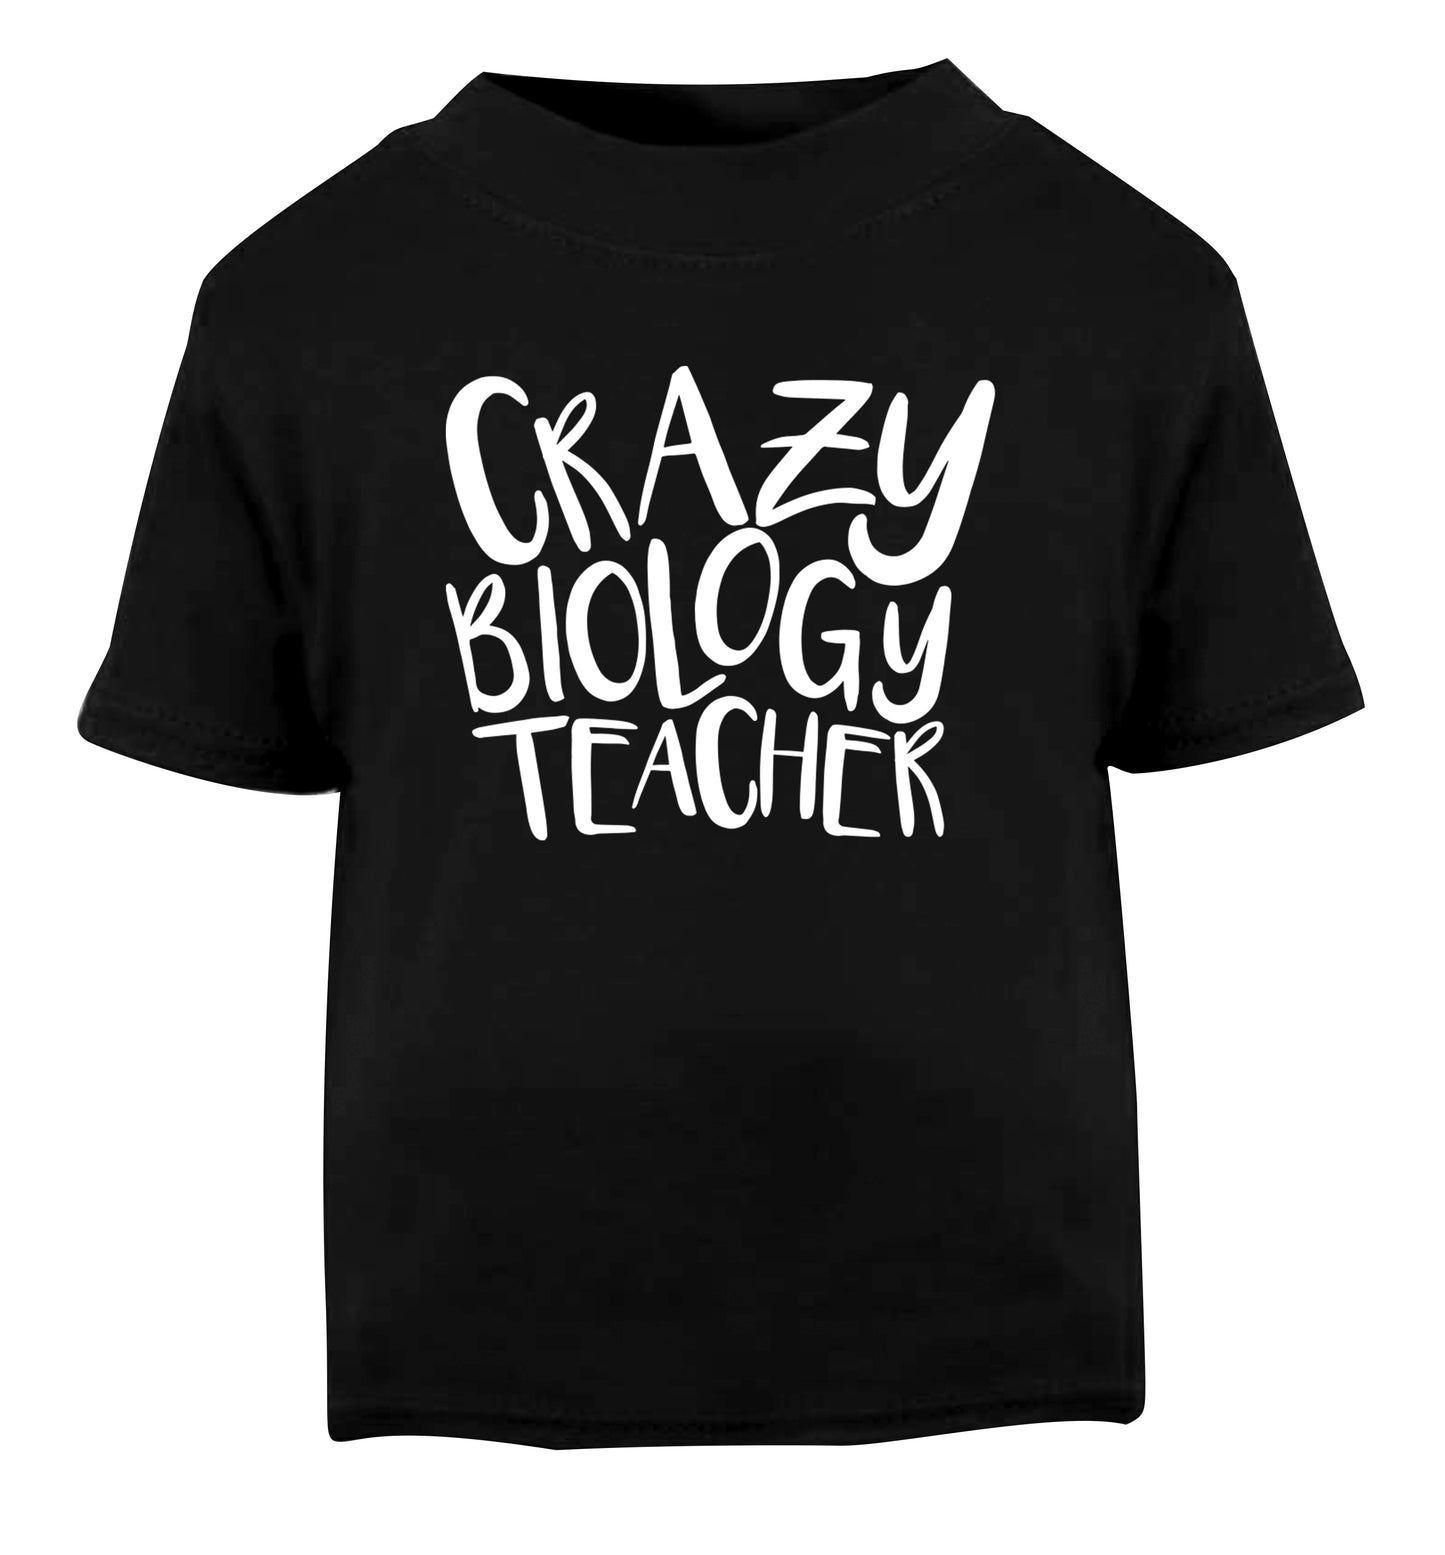 Crazy biology teacher Black Baby Toddler Tshirt 2 years